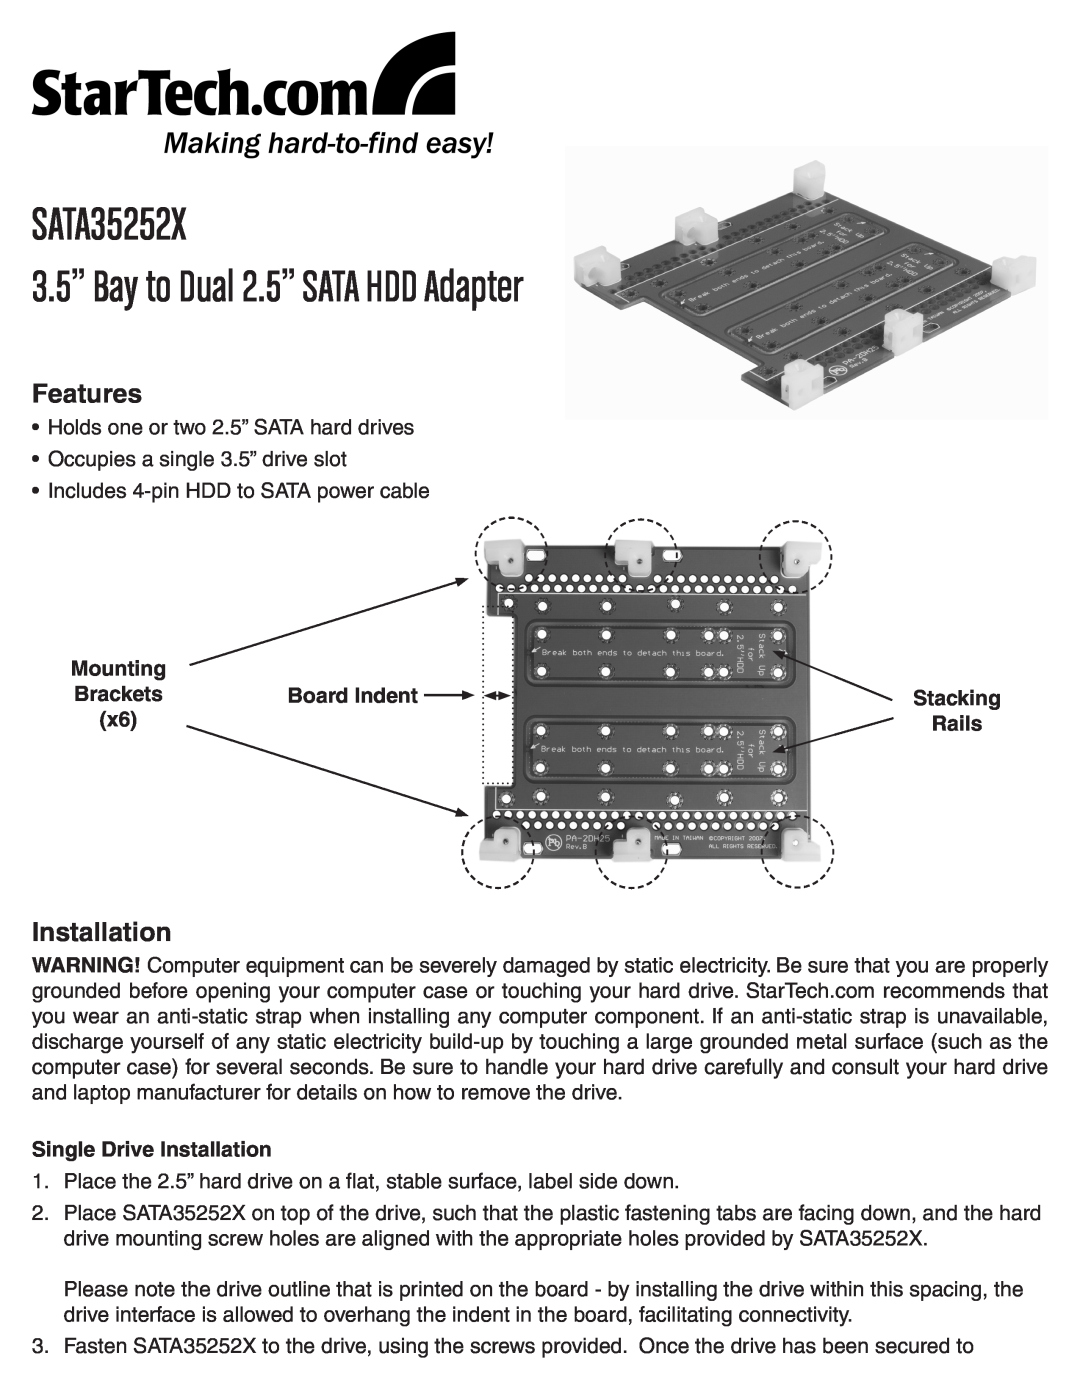 StarTech.com SATA35252X manual Board Indent, Rails, Single Drive Installation, 3.5” Bay to Dual 2.5” SATA HDD Adapter 